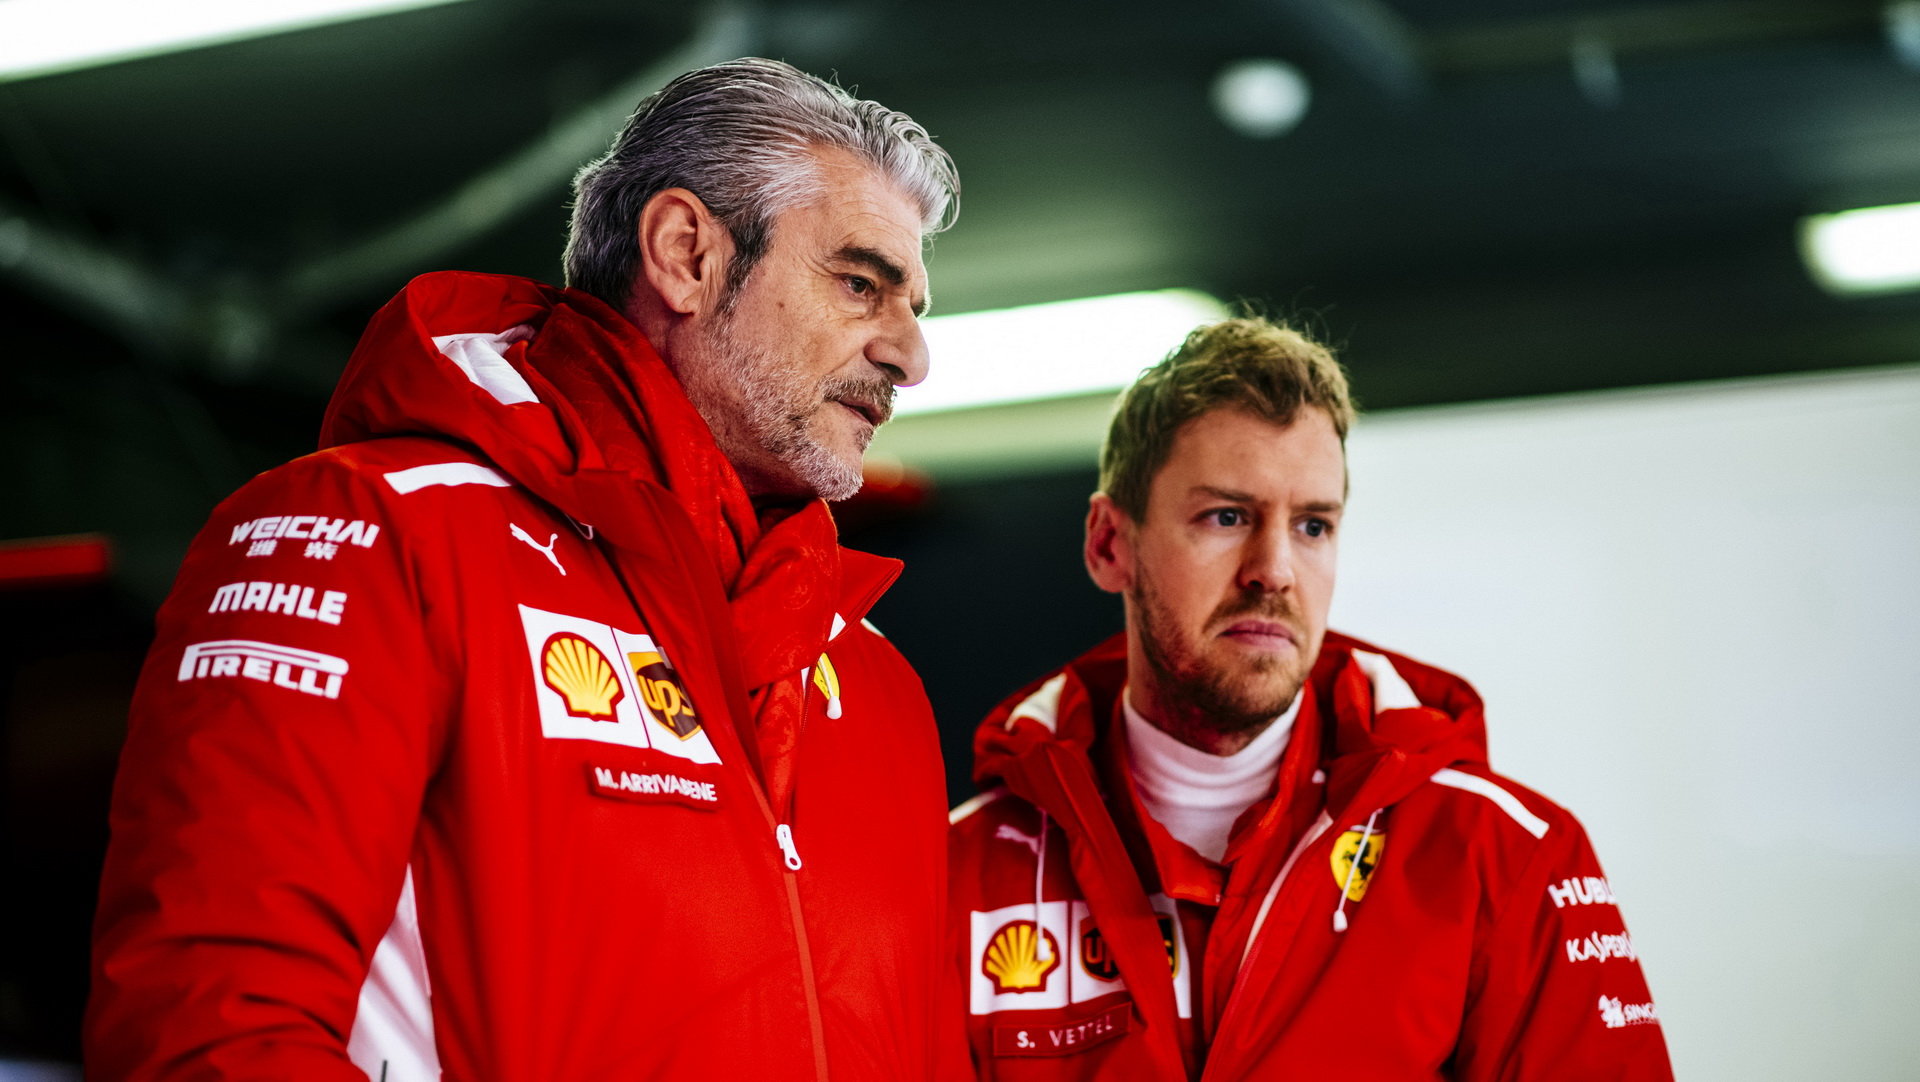 Maurizio Arrivabene a Sebastian Vettel v Barceloně